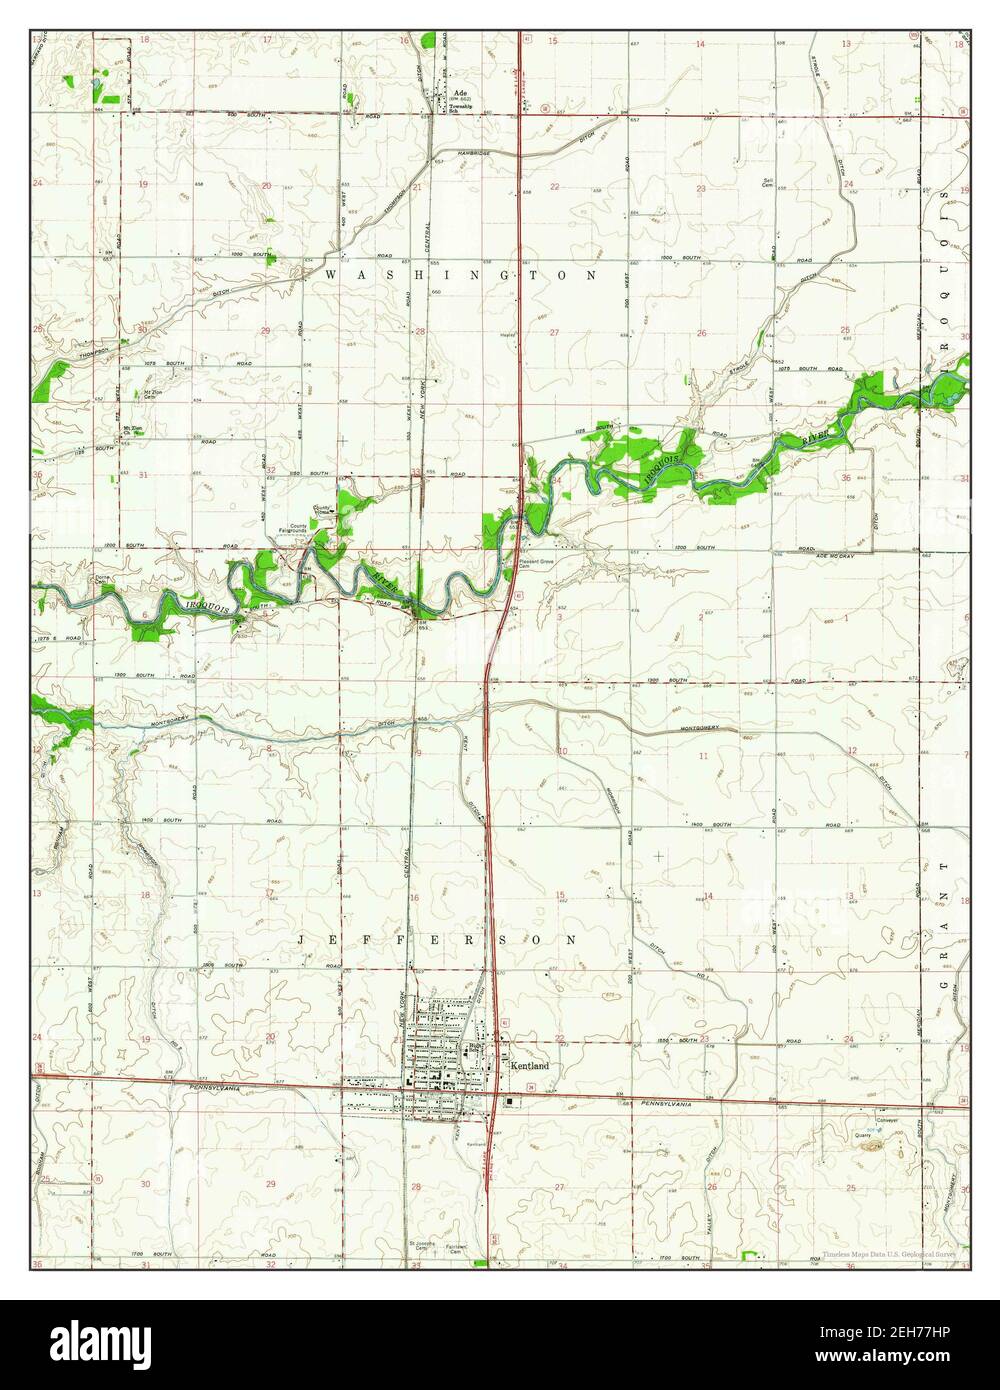 Kentland, Indiana, map 1961, 1:24000, United States of America by Timeless Maps, data U.S. Geological Survey Stock Photo